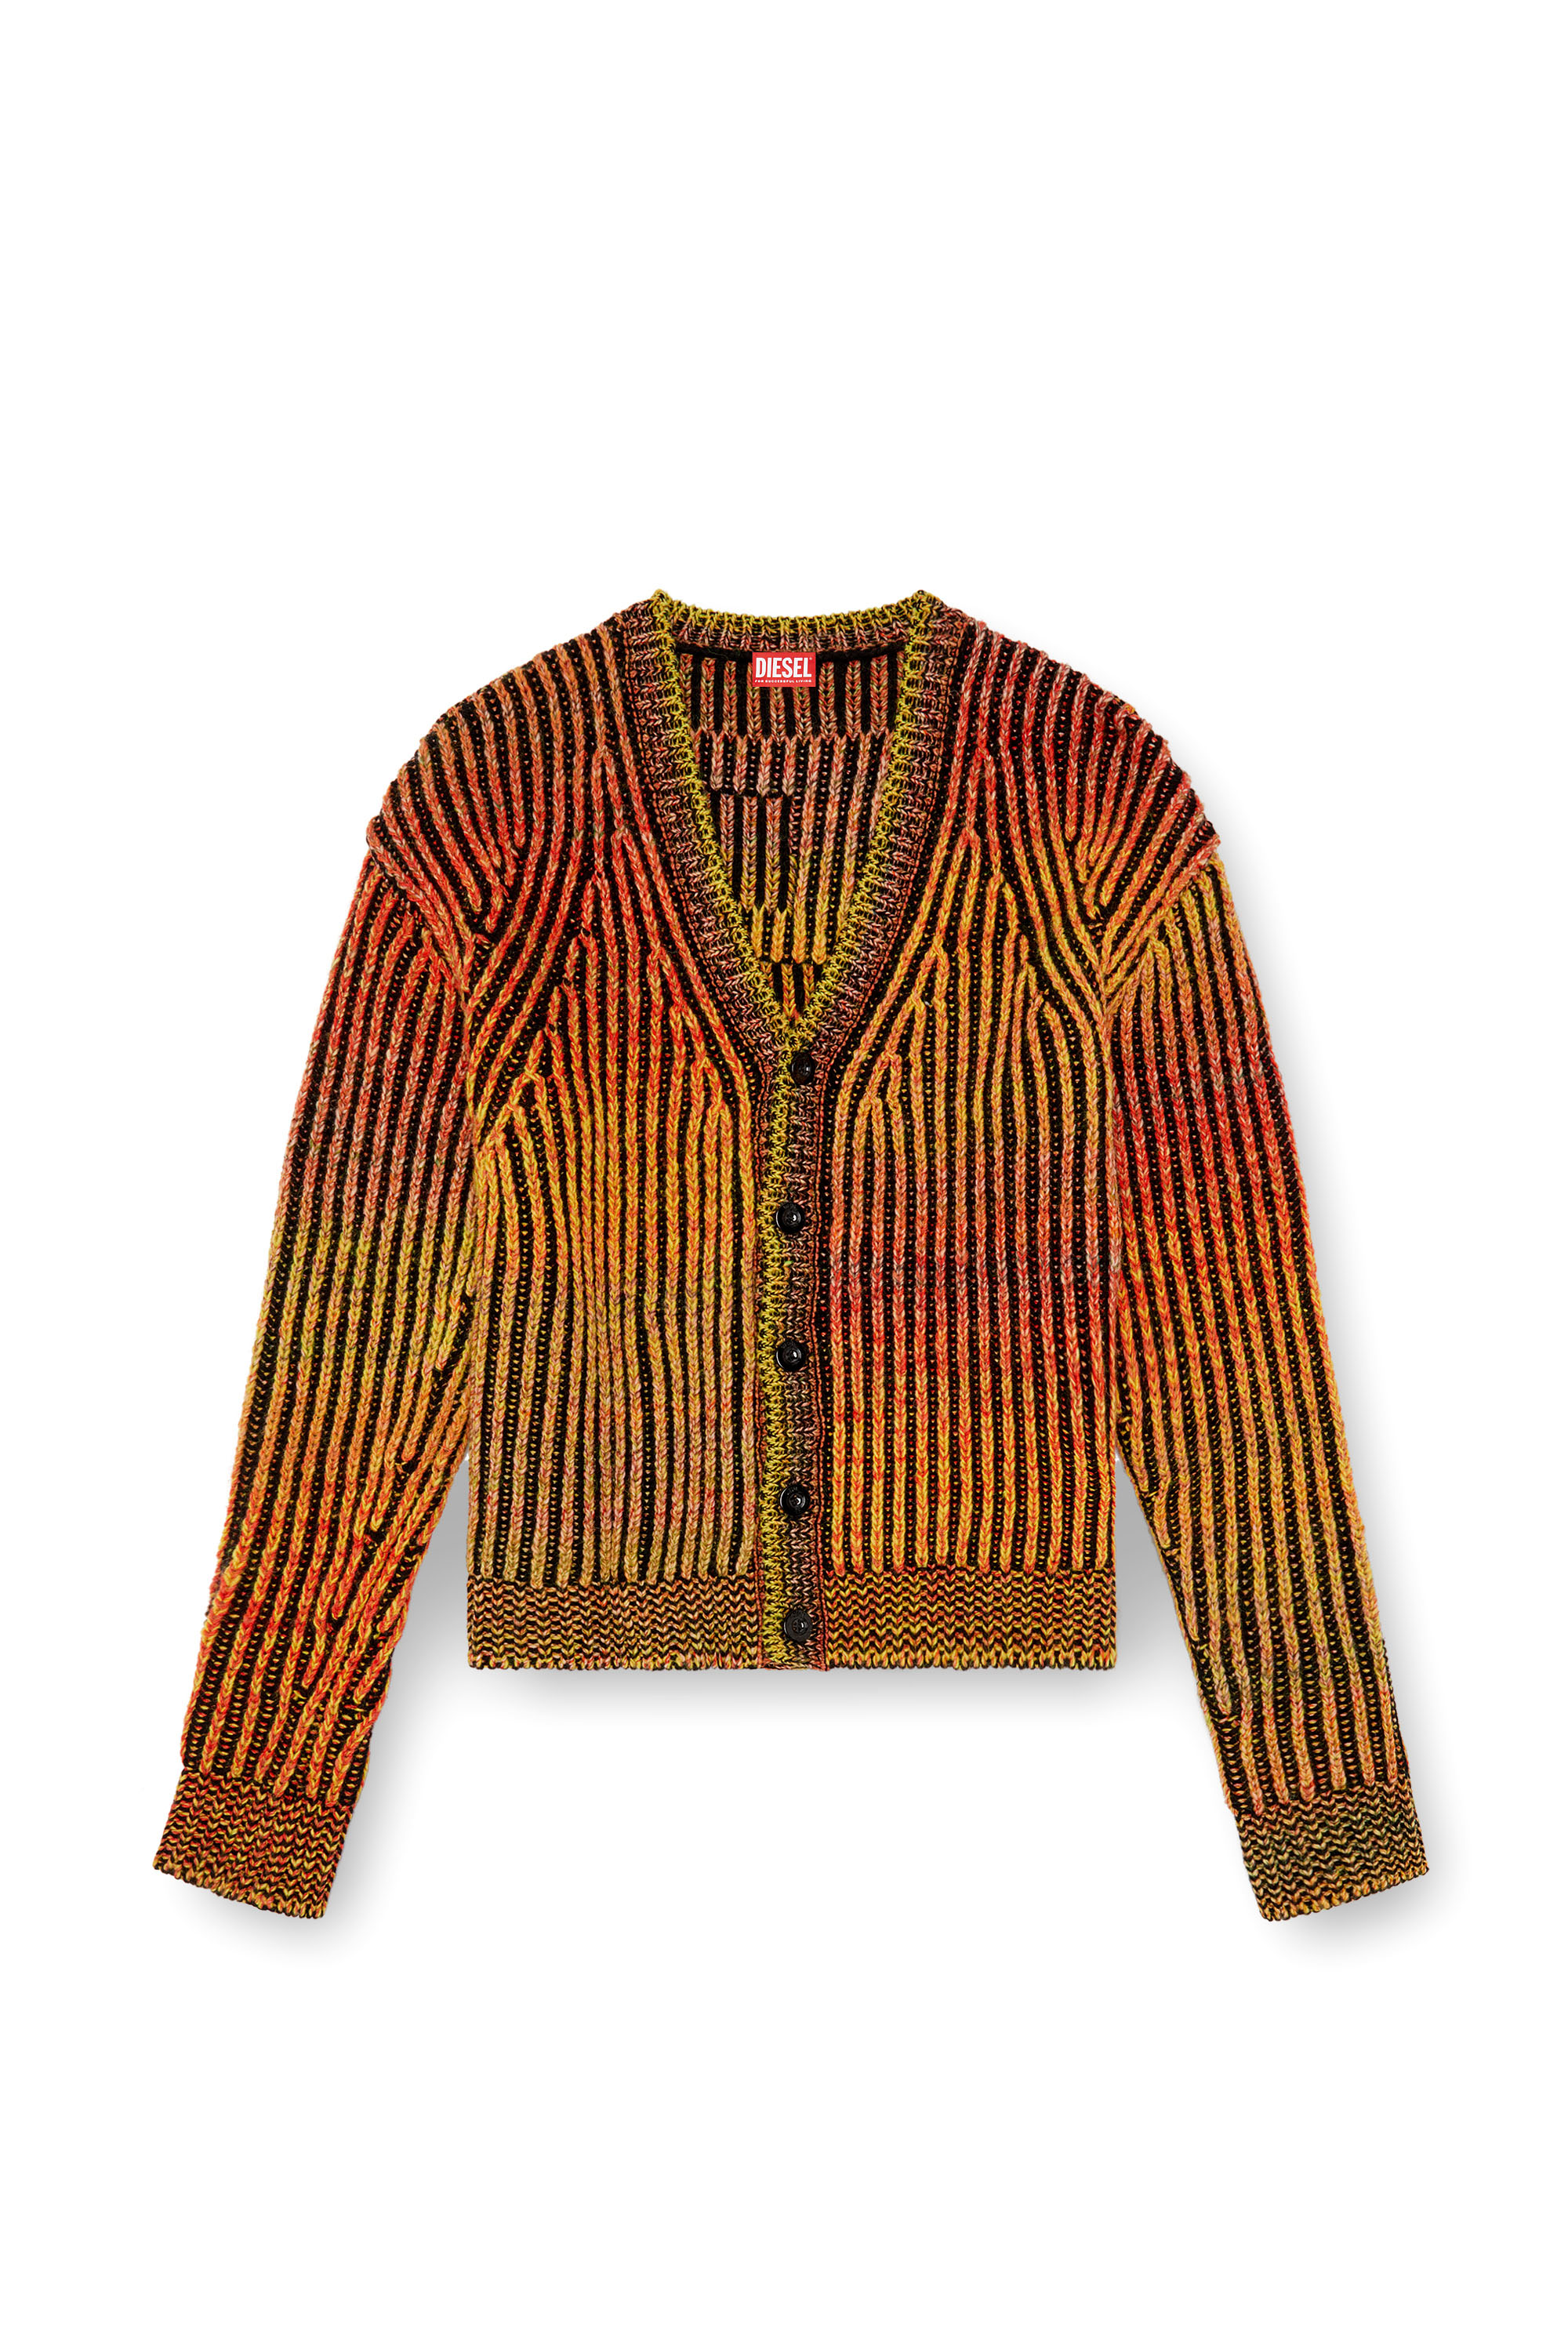 Diesel - K-OAKLAND-CR, Uomo Striped ribbed cardigan in wool blend in Arancione - Image 3